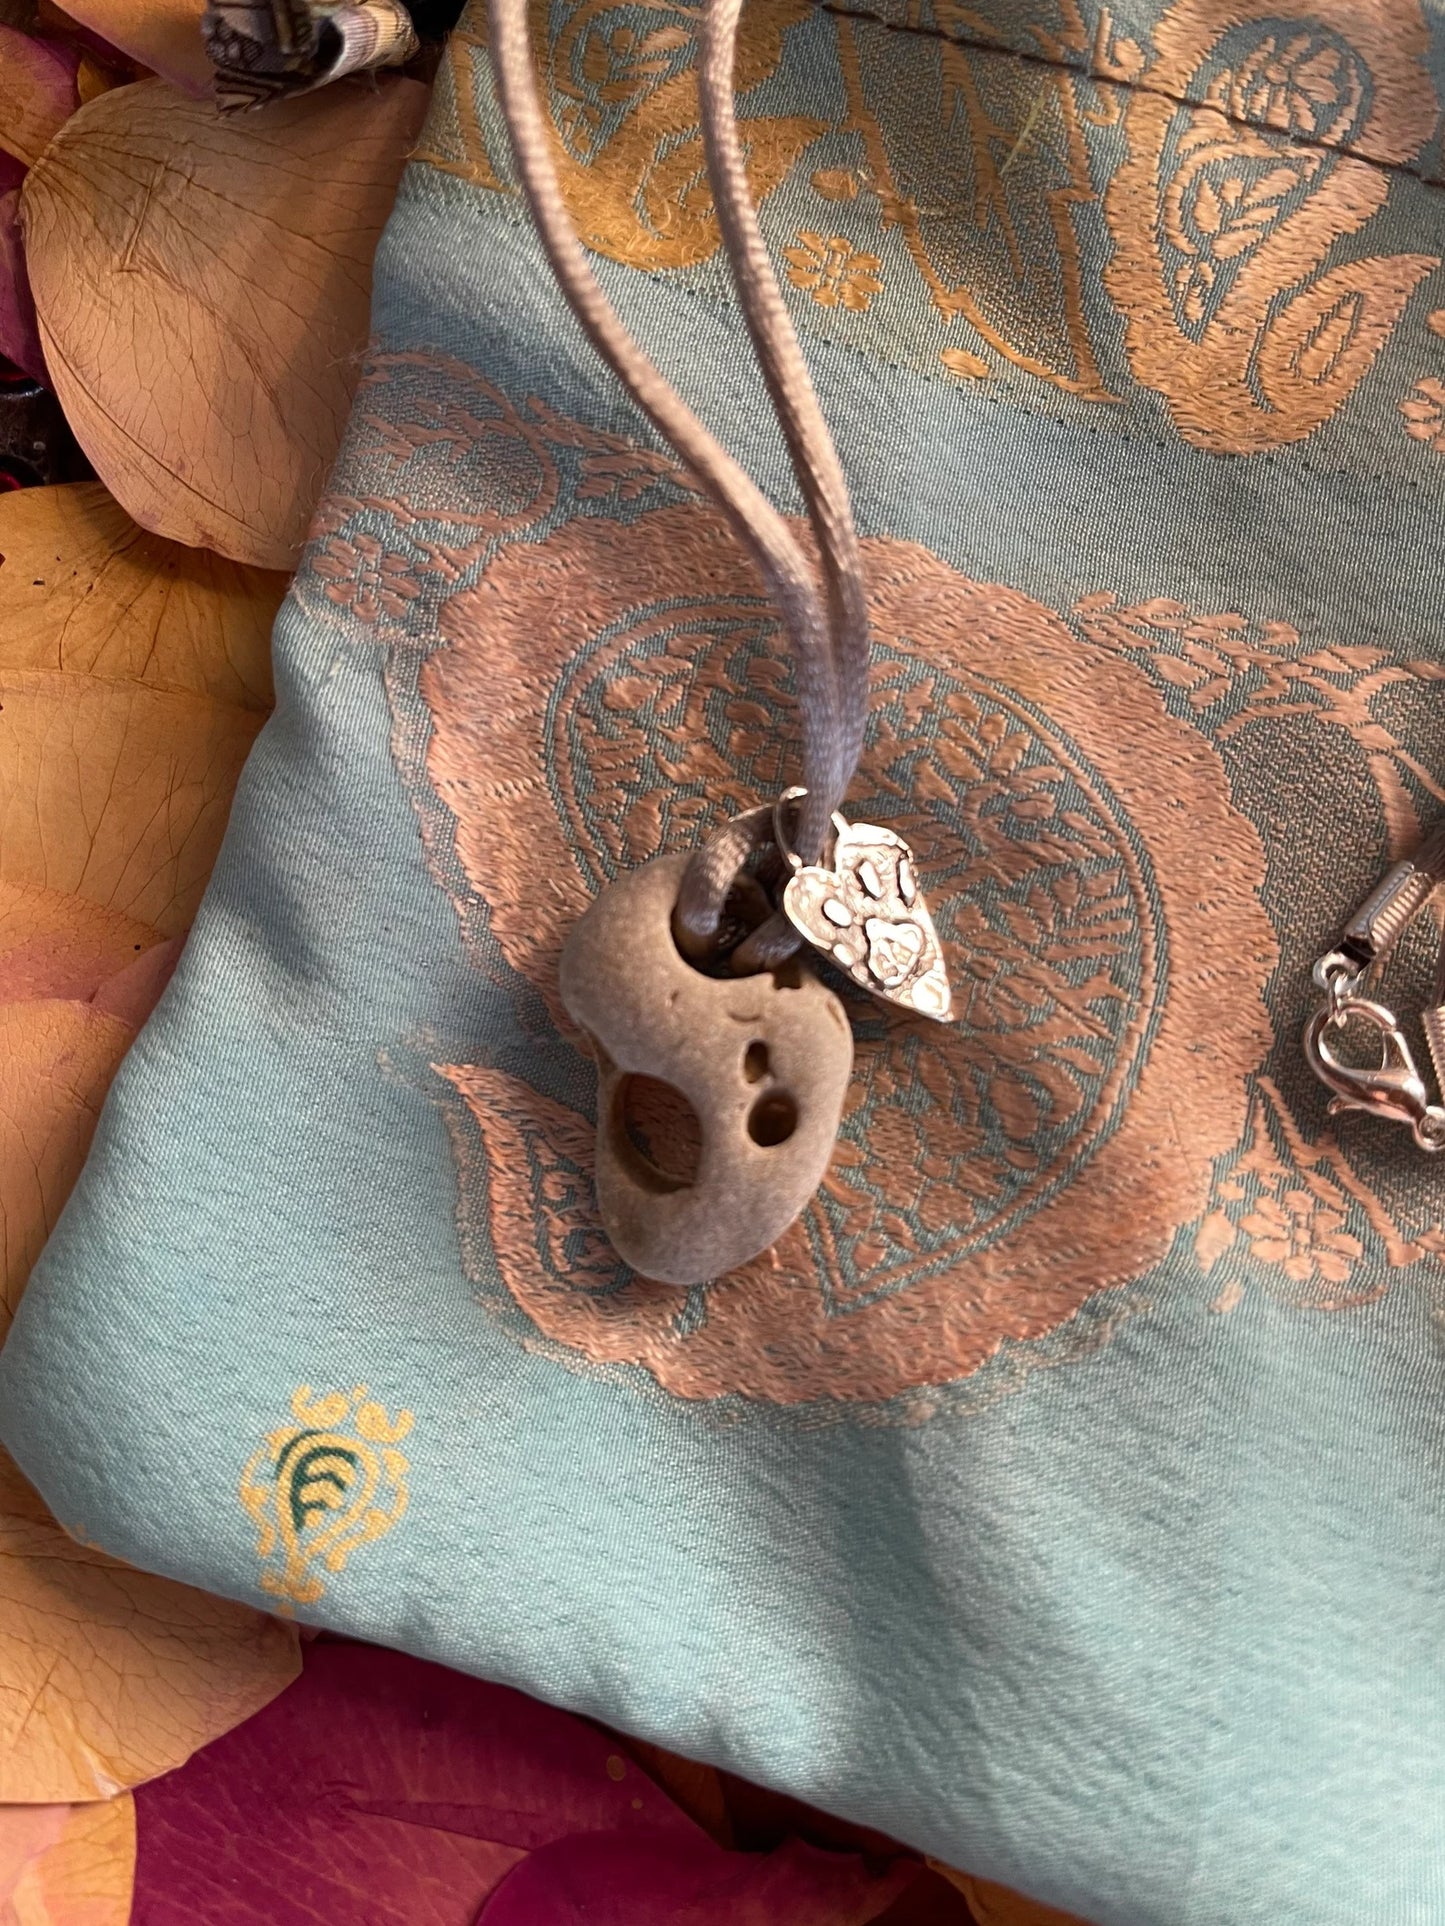 Cat Gift, Dog Gift, Artisan Silver Paw Charm Island Stone Pendant, Bodhi Pets